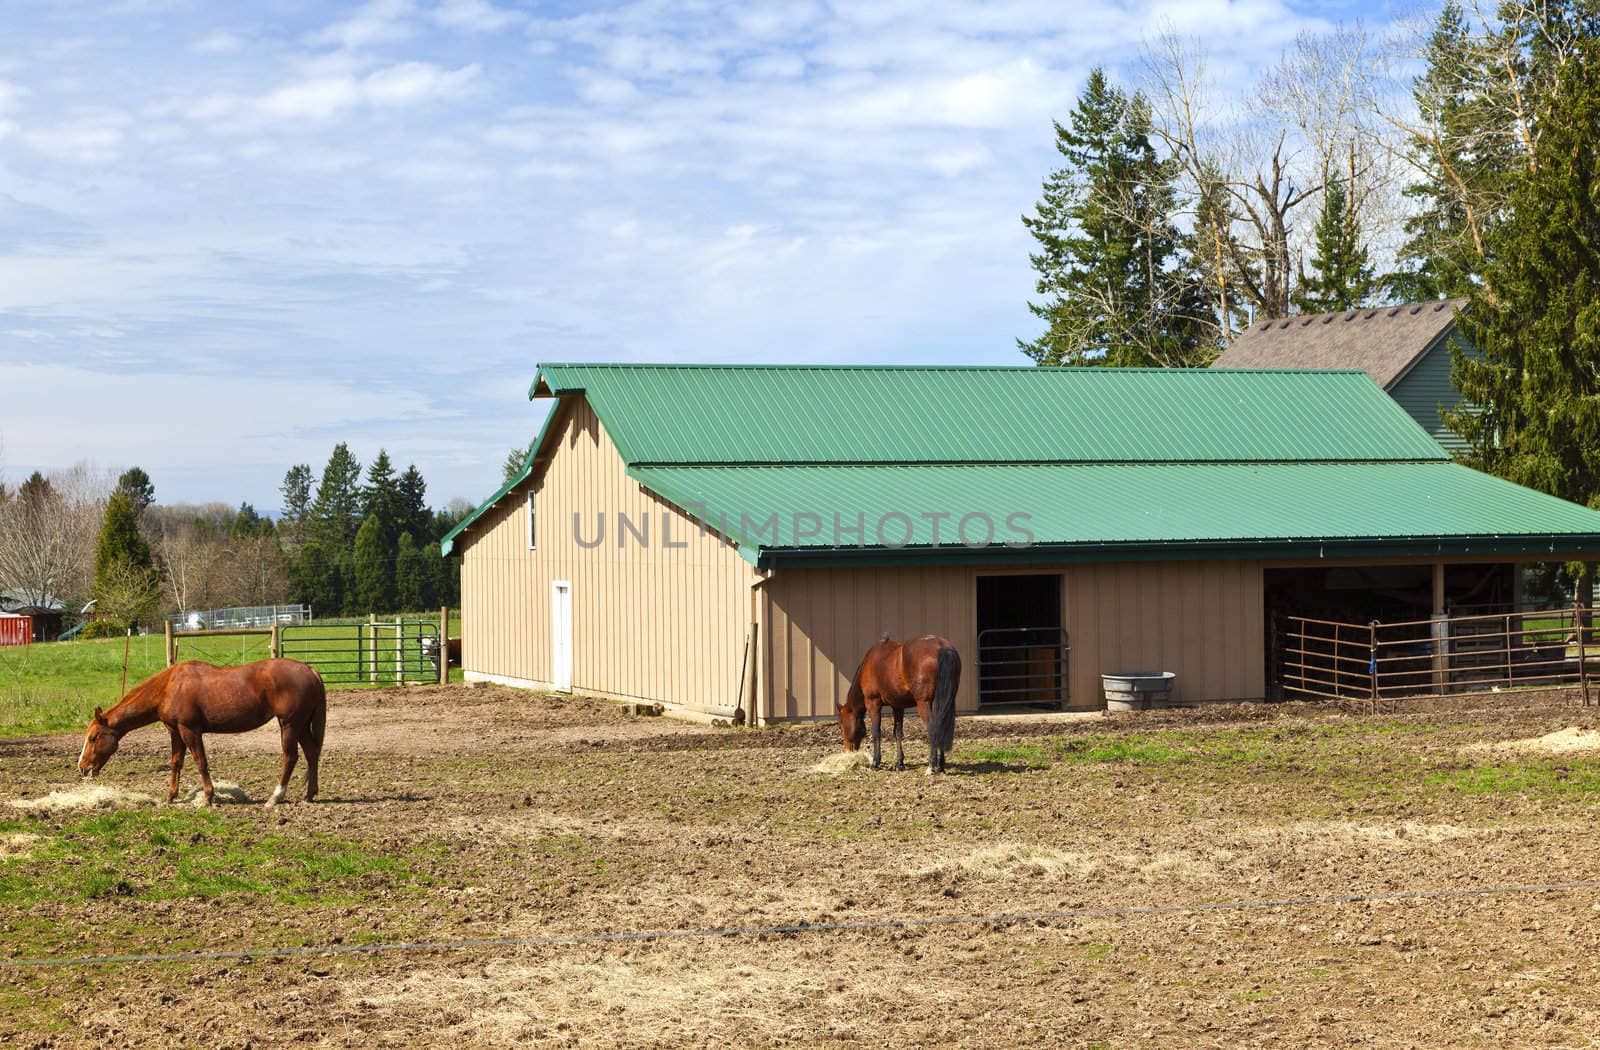 Feeding horses and a barn in rural Oregon.